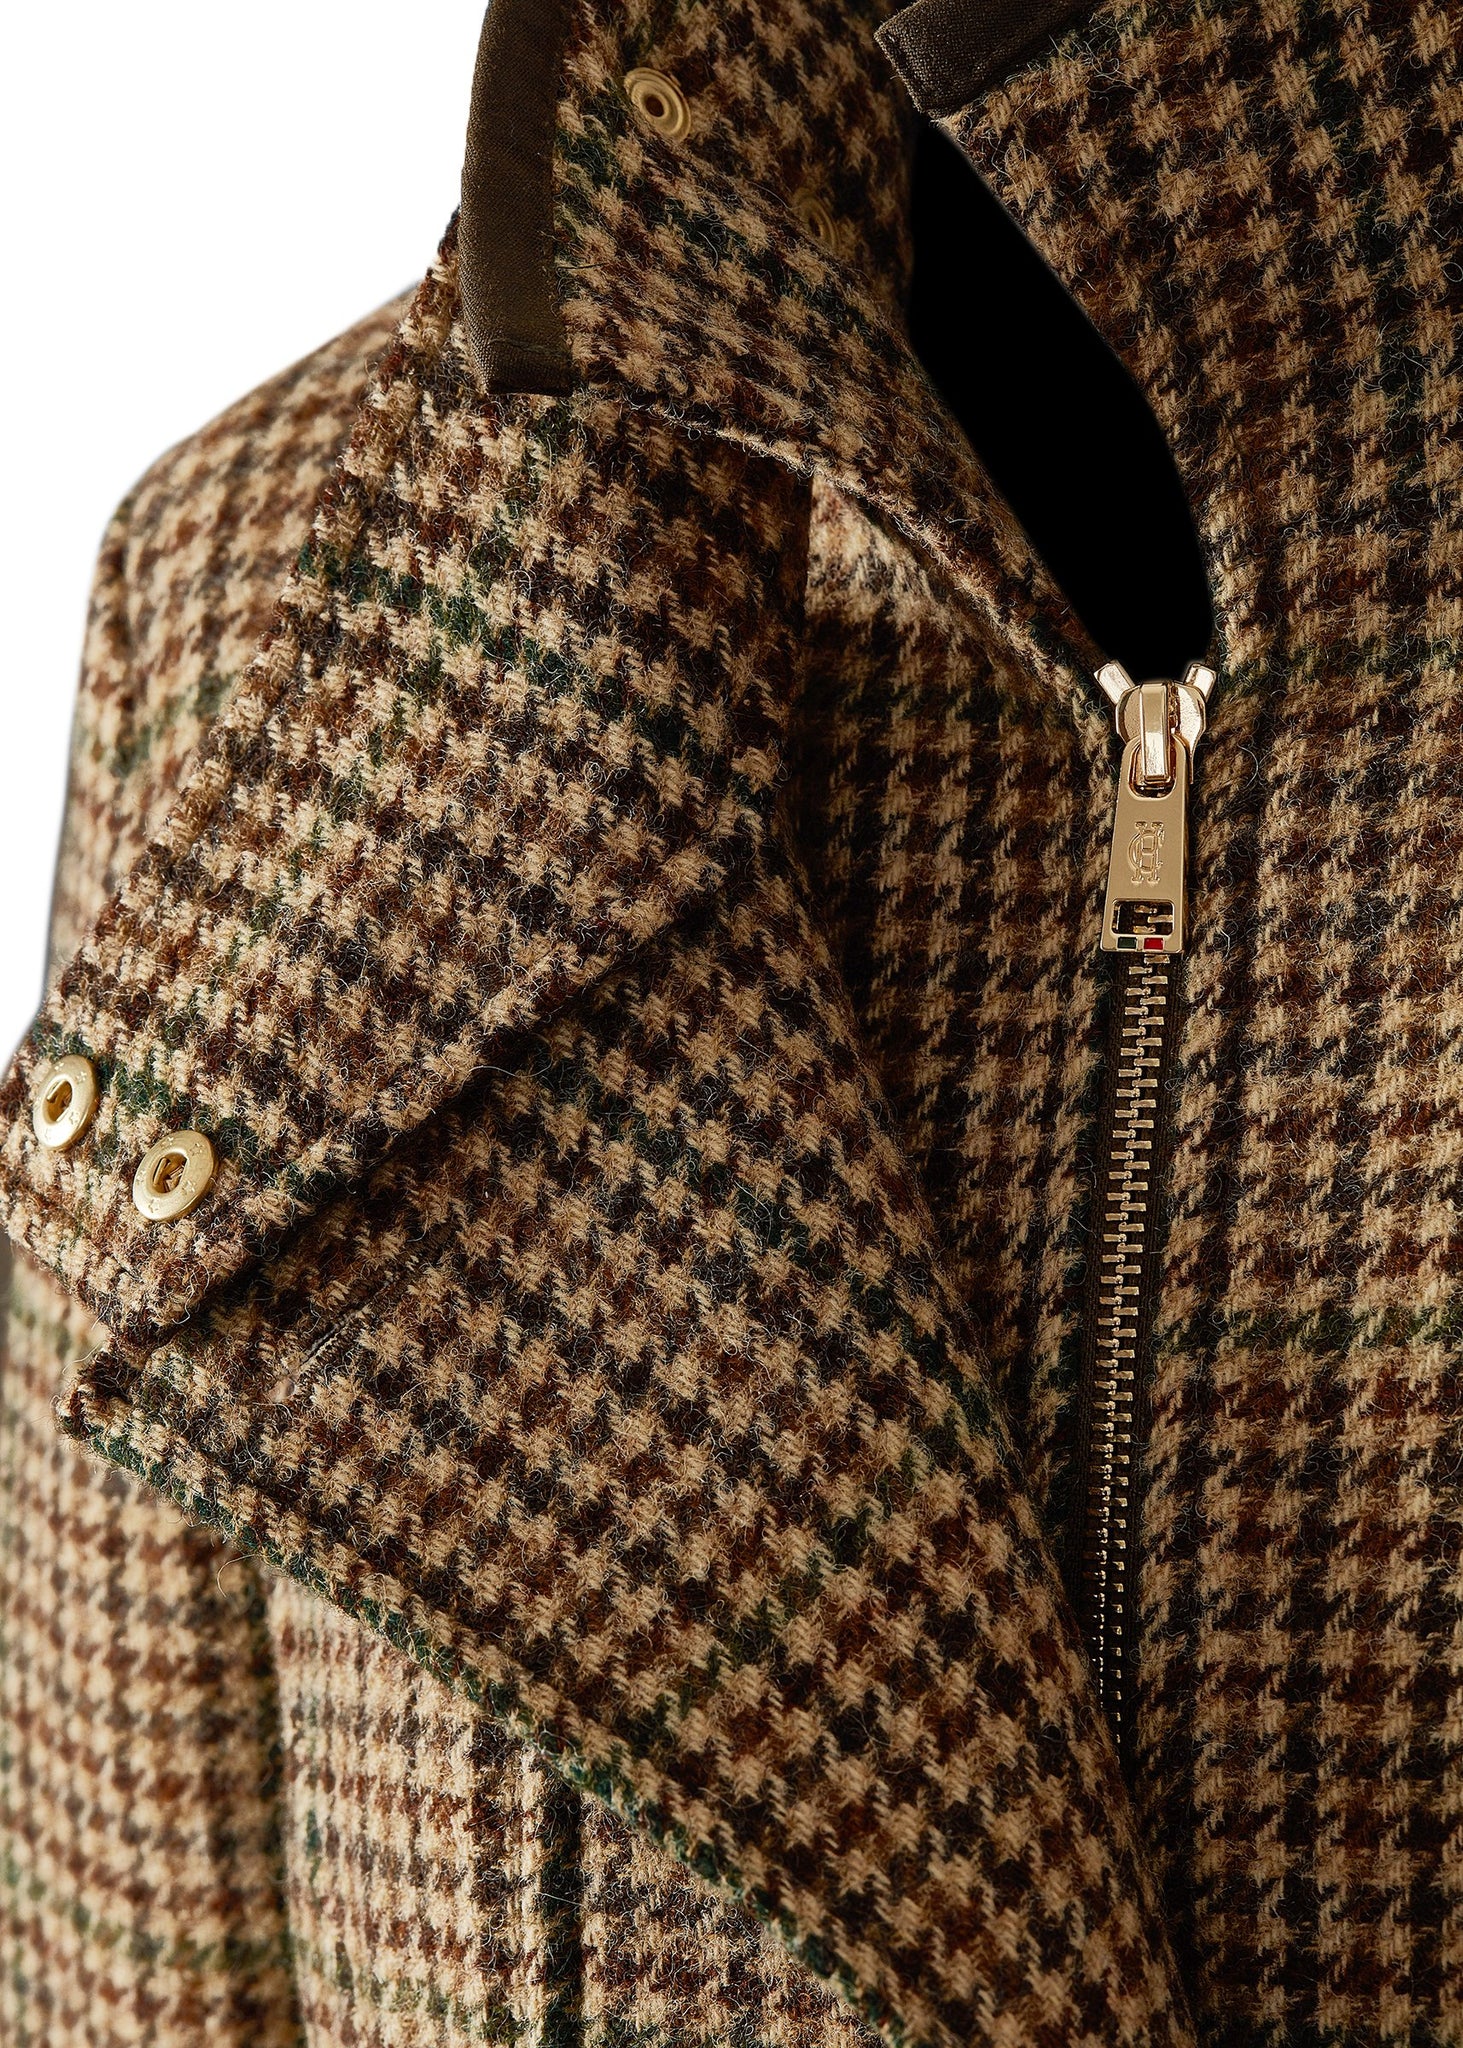 Open collar detail of green and brown tartan tweed womens field coat